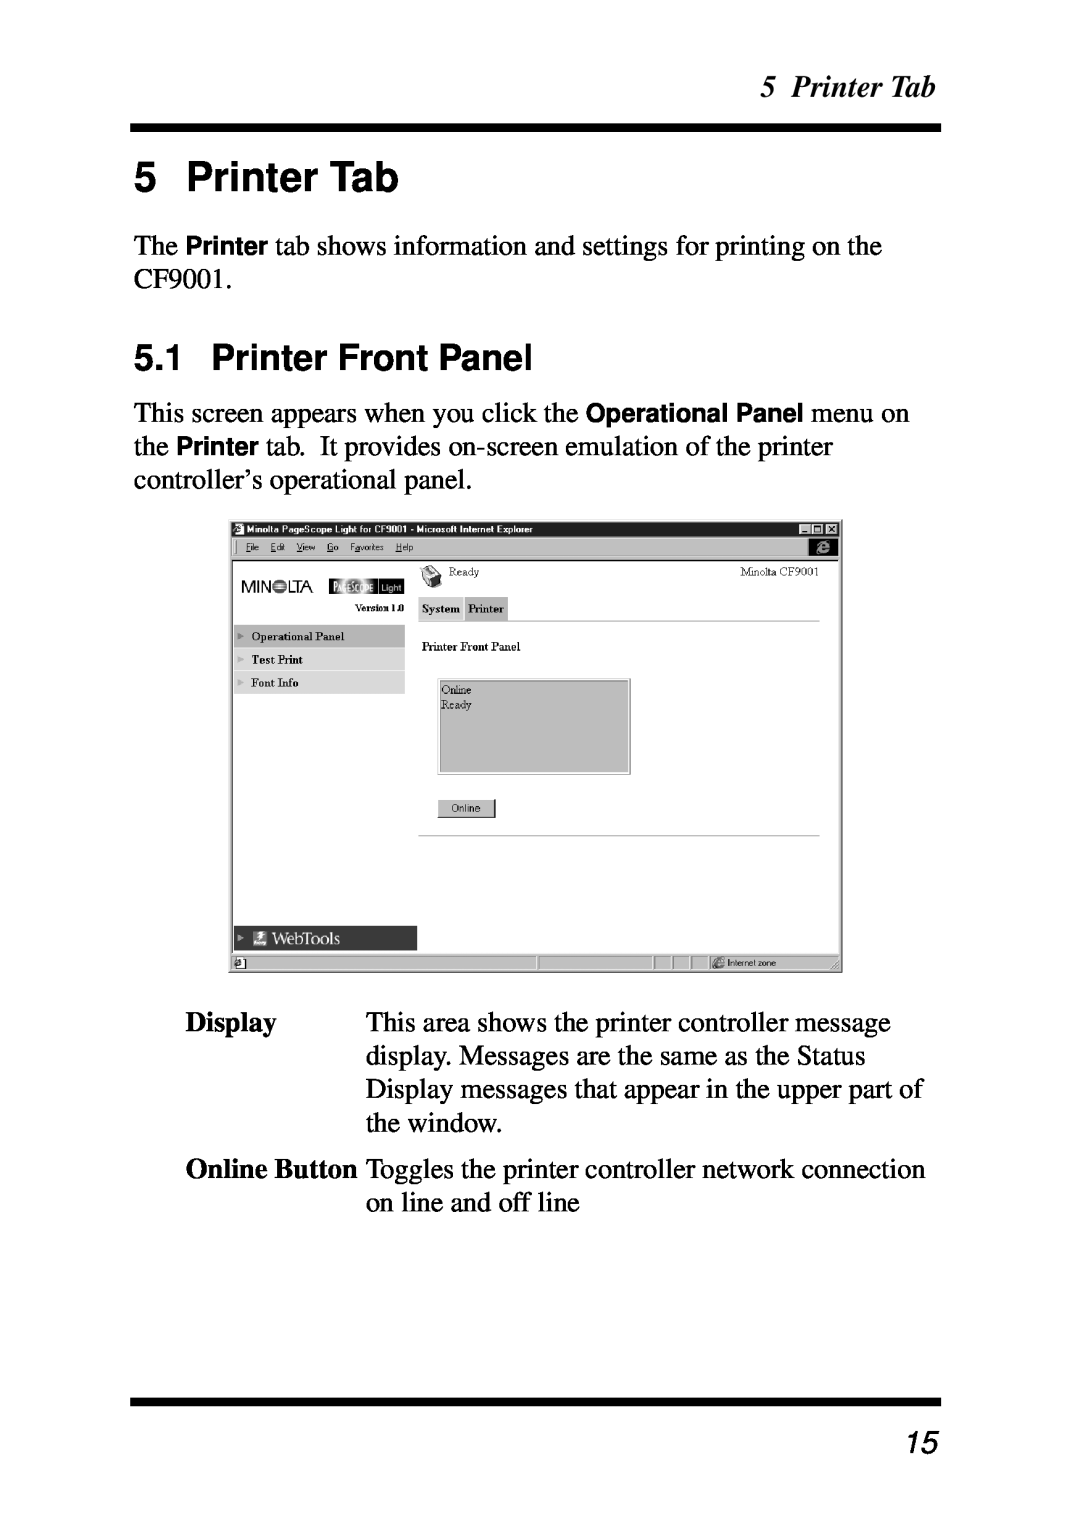 Minolta X3e, Z4 manual Printer Tab, Printer Front Panel 